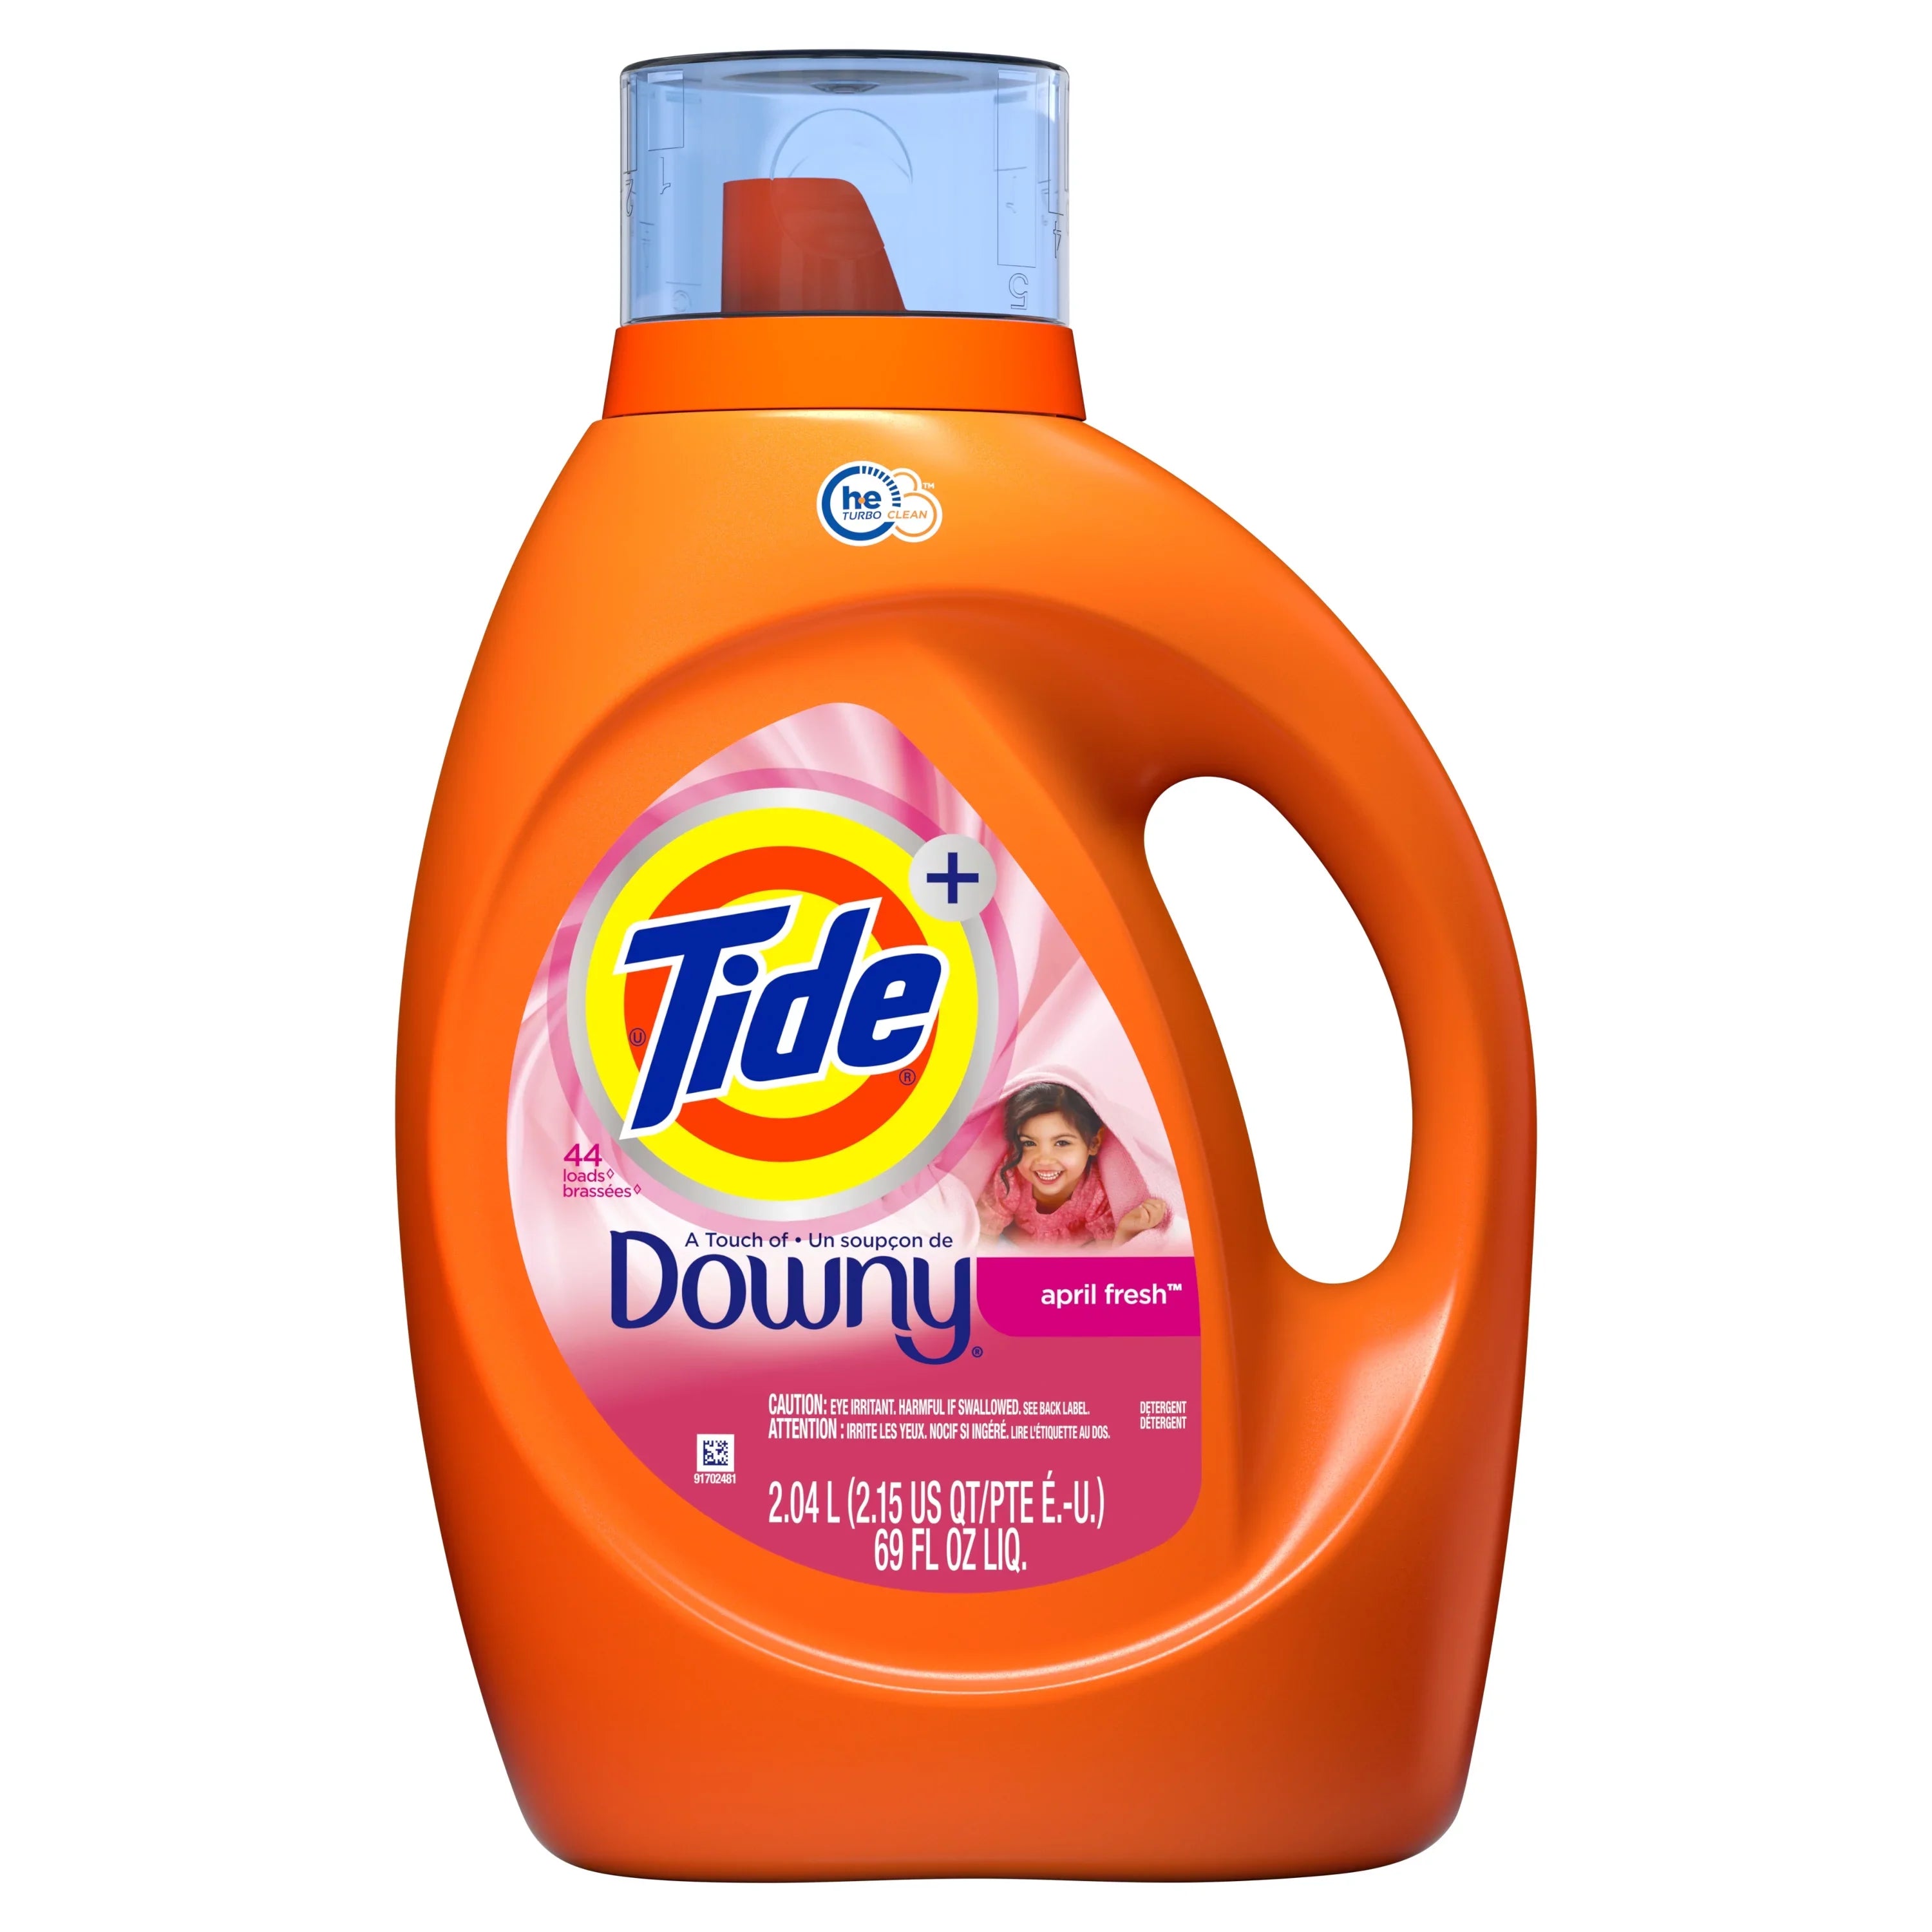 Tide Liquid Laundry Detergent High Efficiency Downy April Fresh 44 Ld (2.04L)